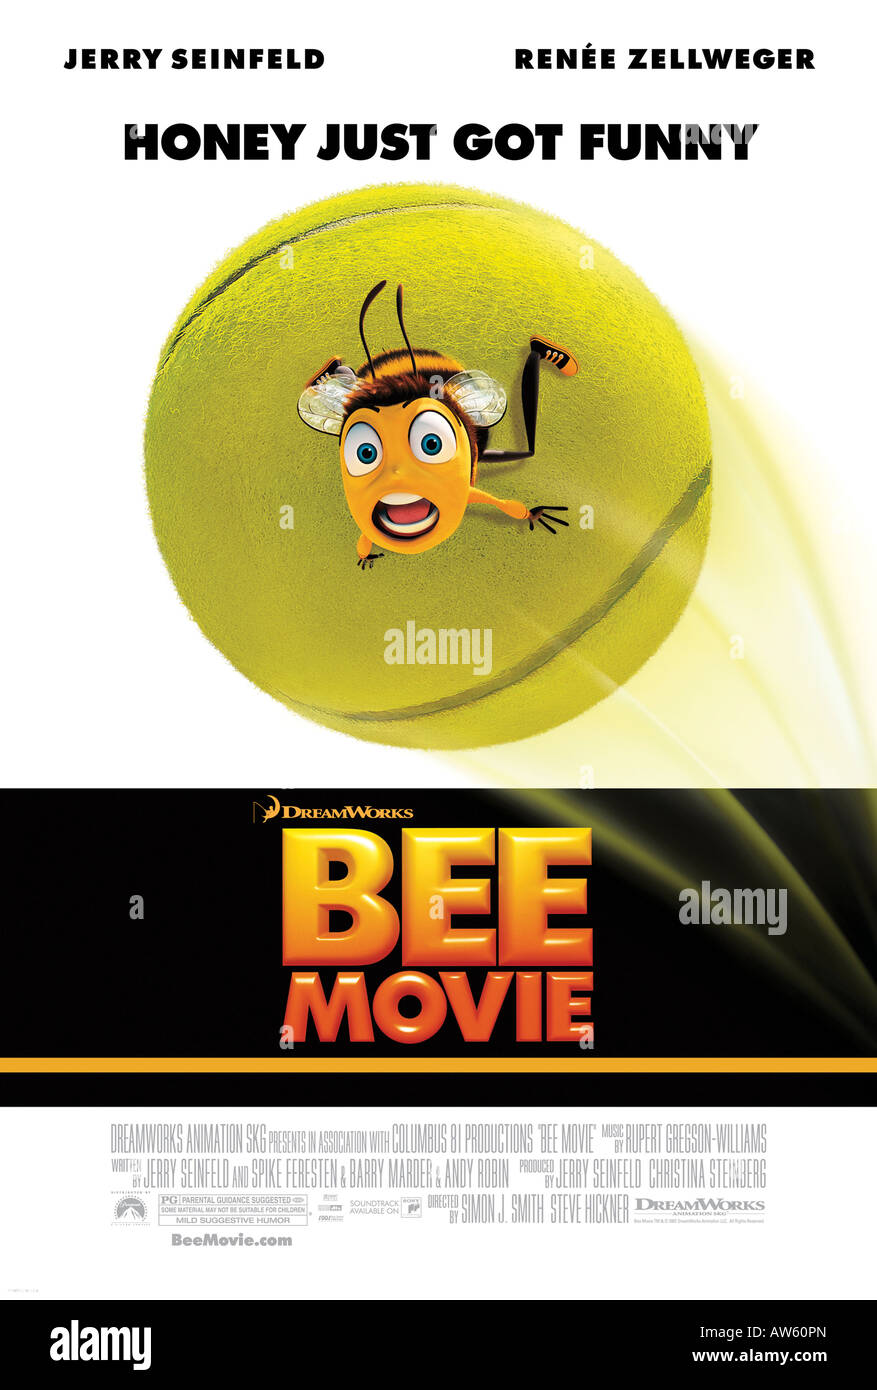 Dreamworks Animation Skg Bee Movie